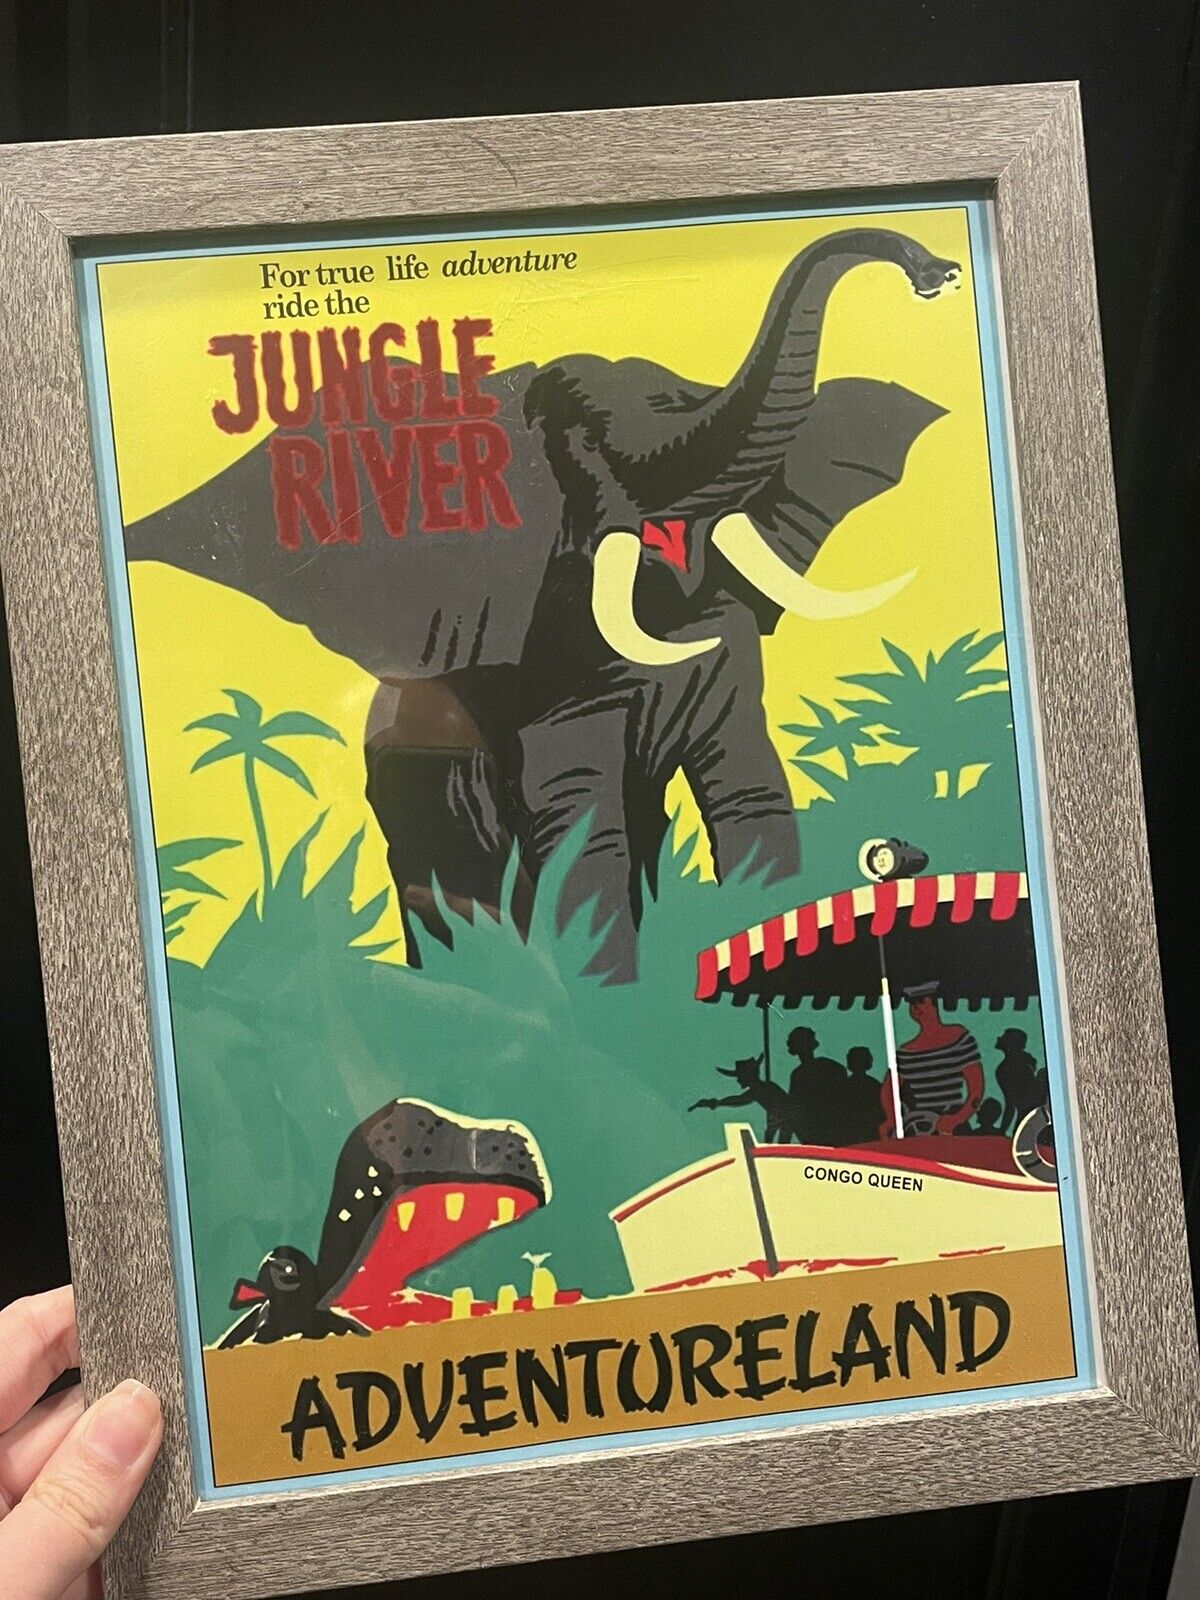 FRAMED Disneyland Jungle River Attraction Poster Print Decor Cruise 13.5 x 10.5